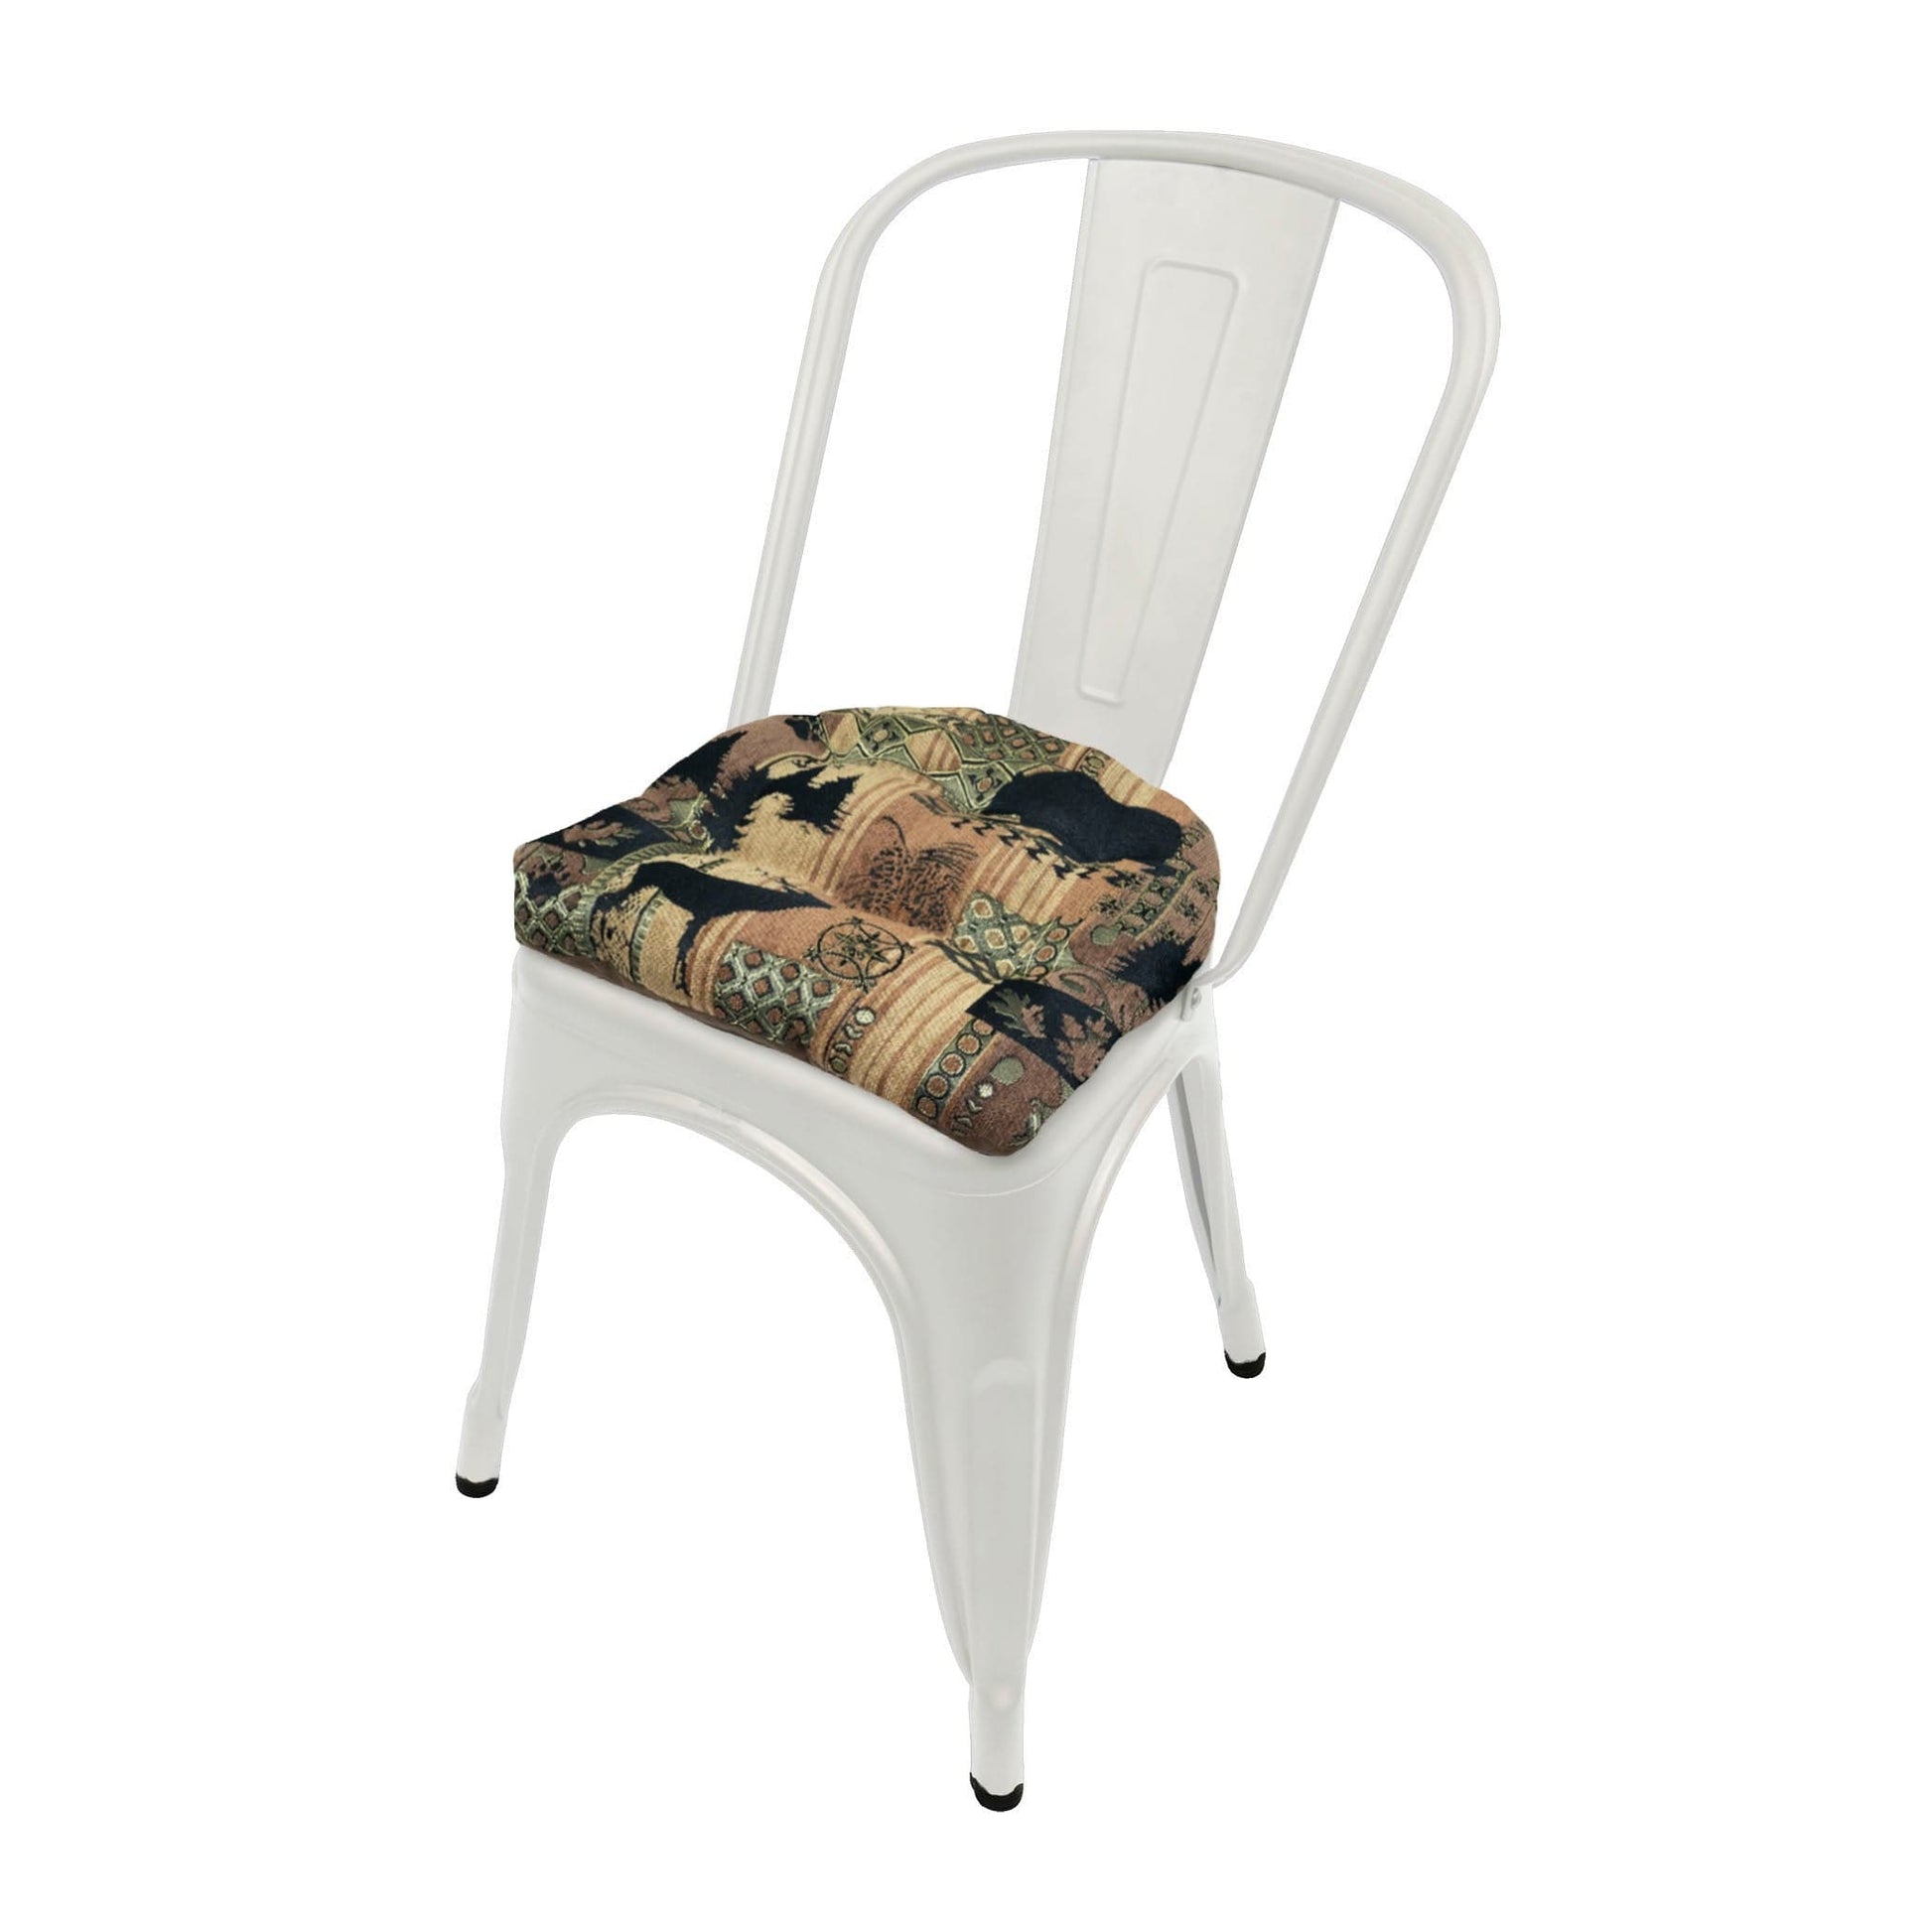 Woodlands Brentwood Industrial Chair Cushion - Latex Foam Fill - Barnett Home Decor 